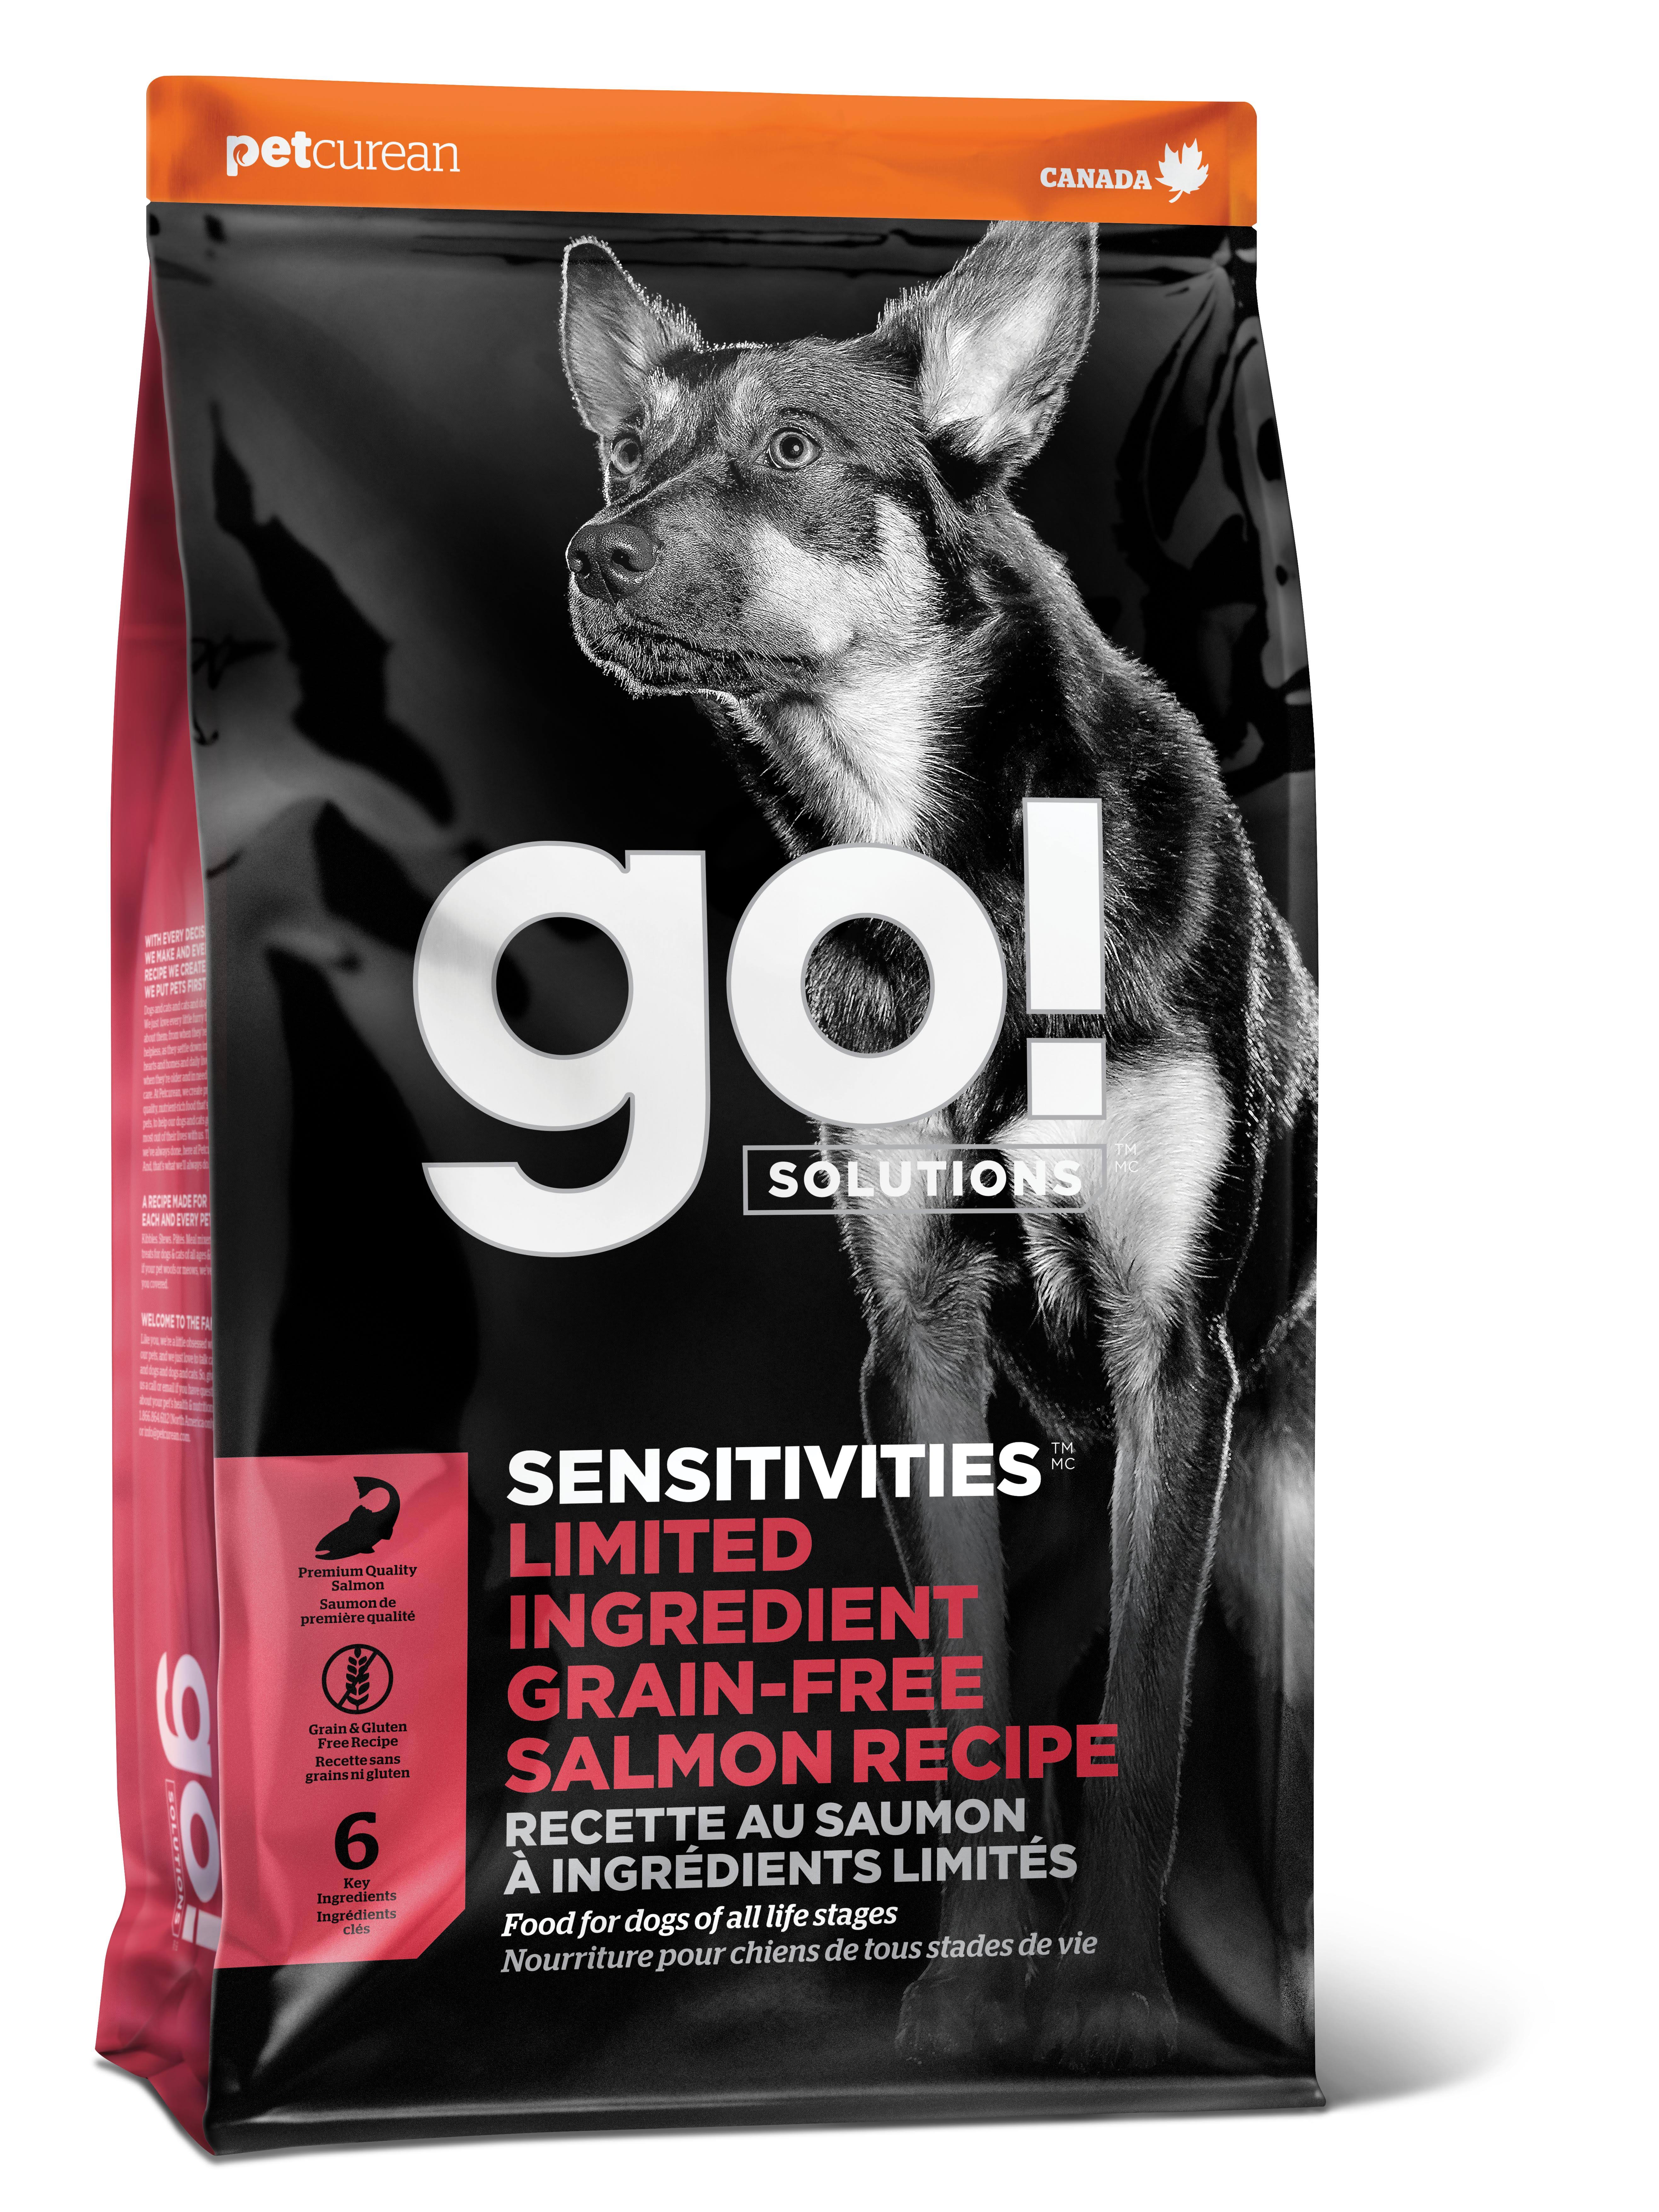 GO! Sensitivities Limited Ingredient Grain Free Dog Food - Salmon